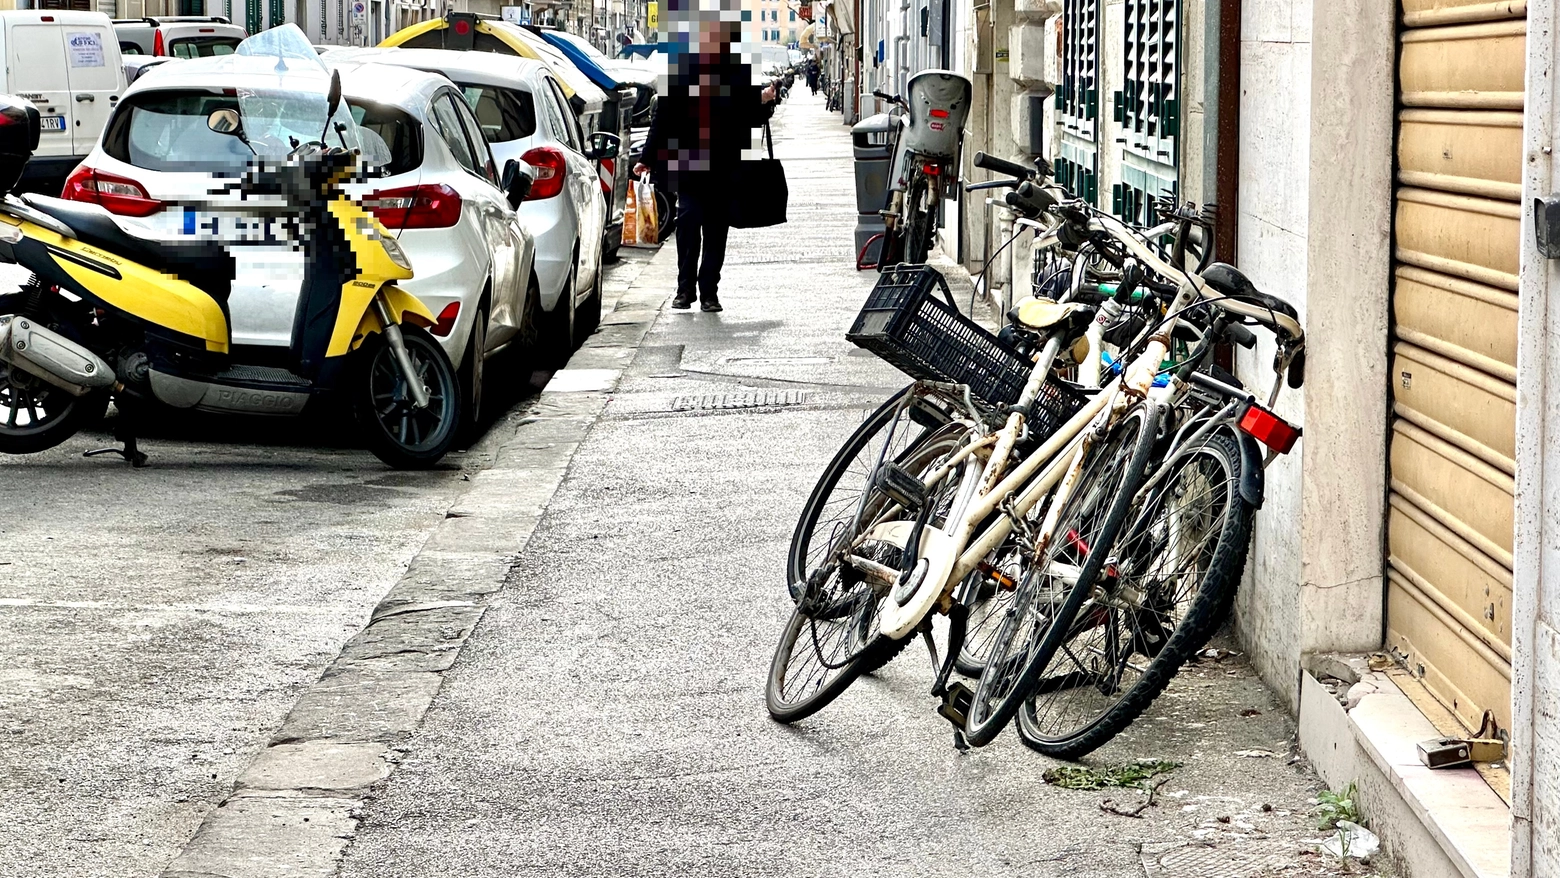 Via Maggi, biciclette ammassate sul marciapiede (Foto Novi)